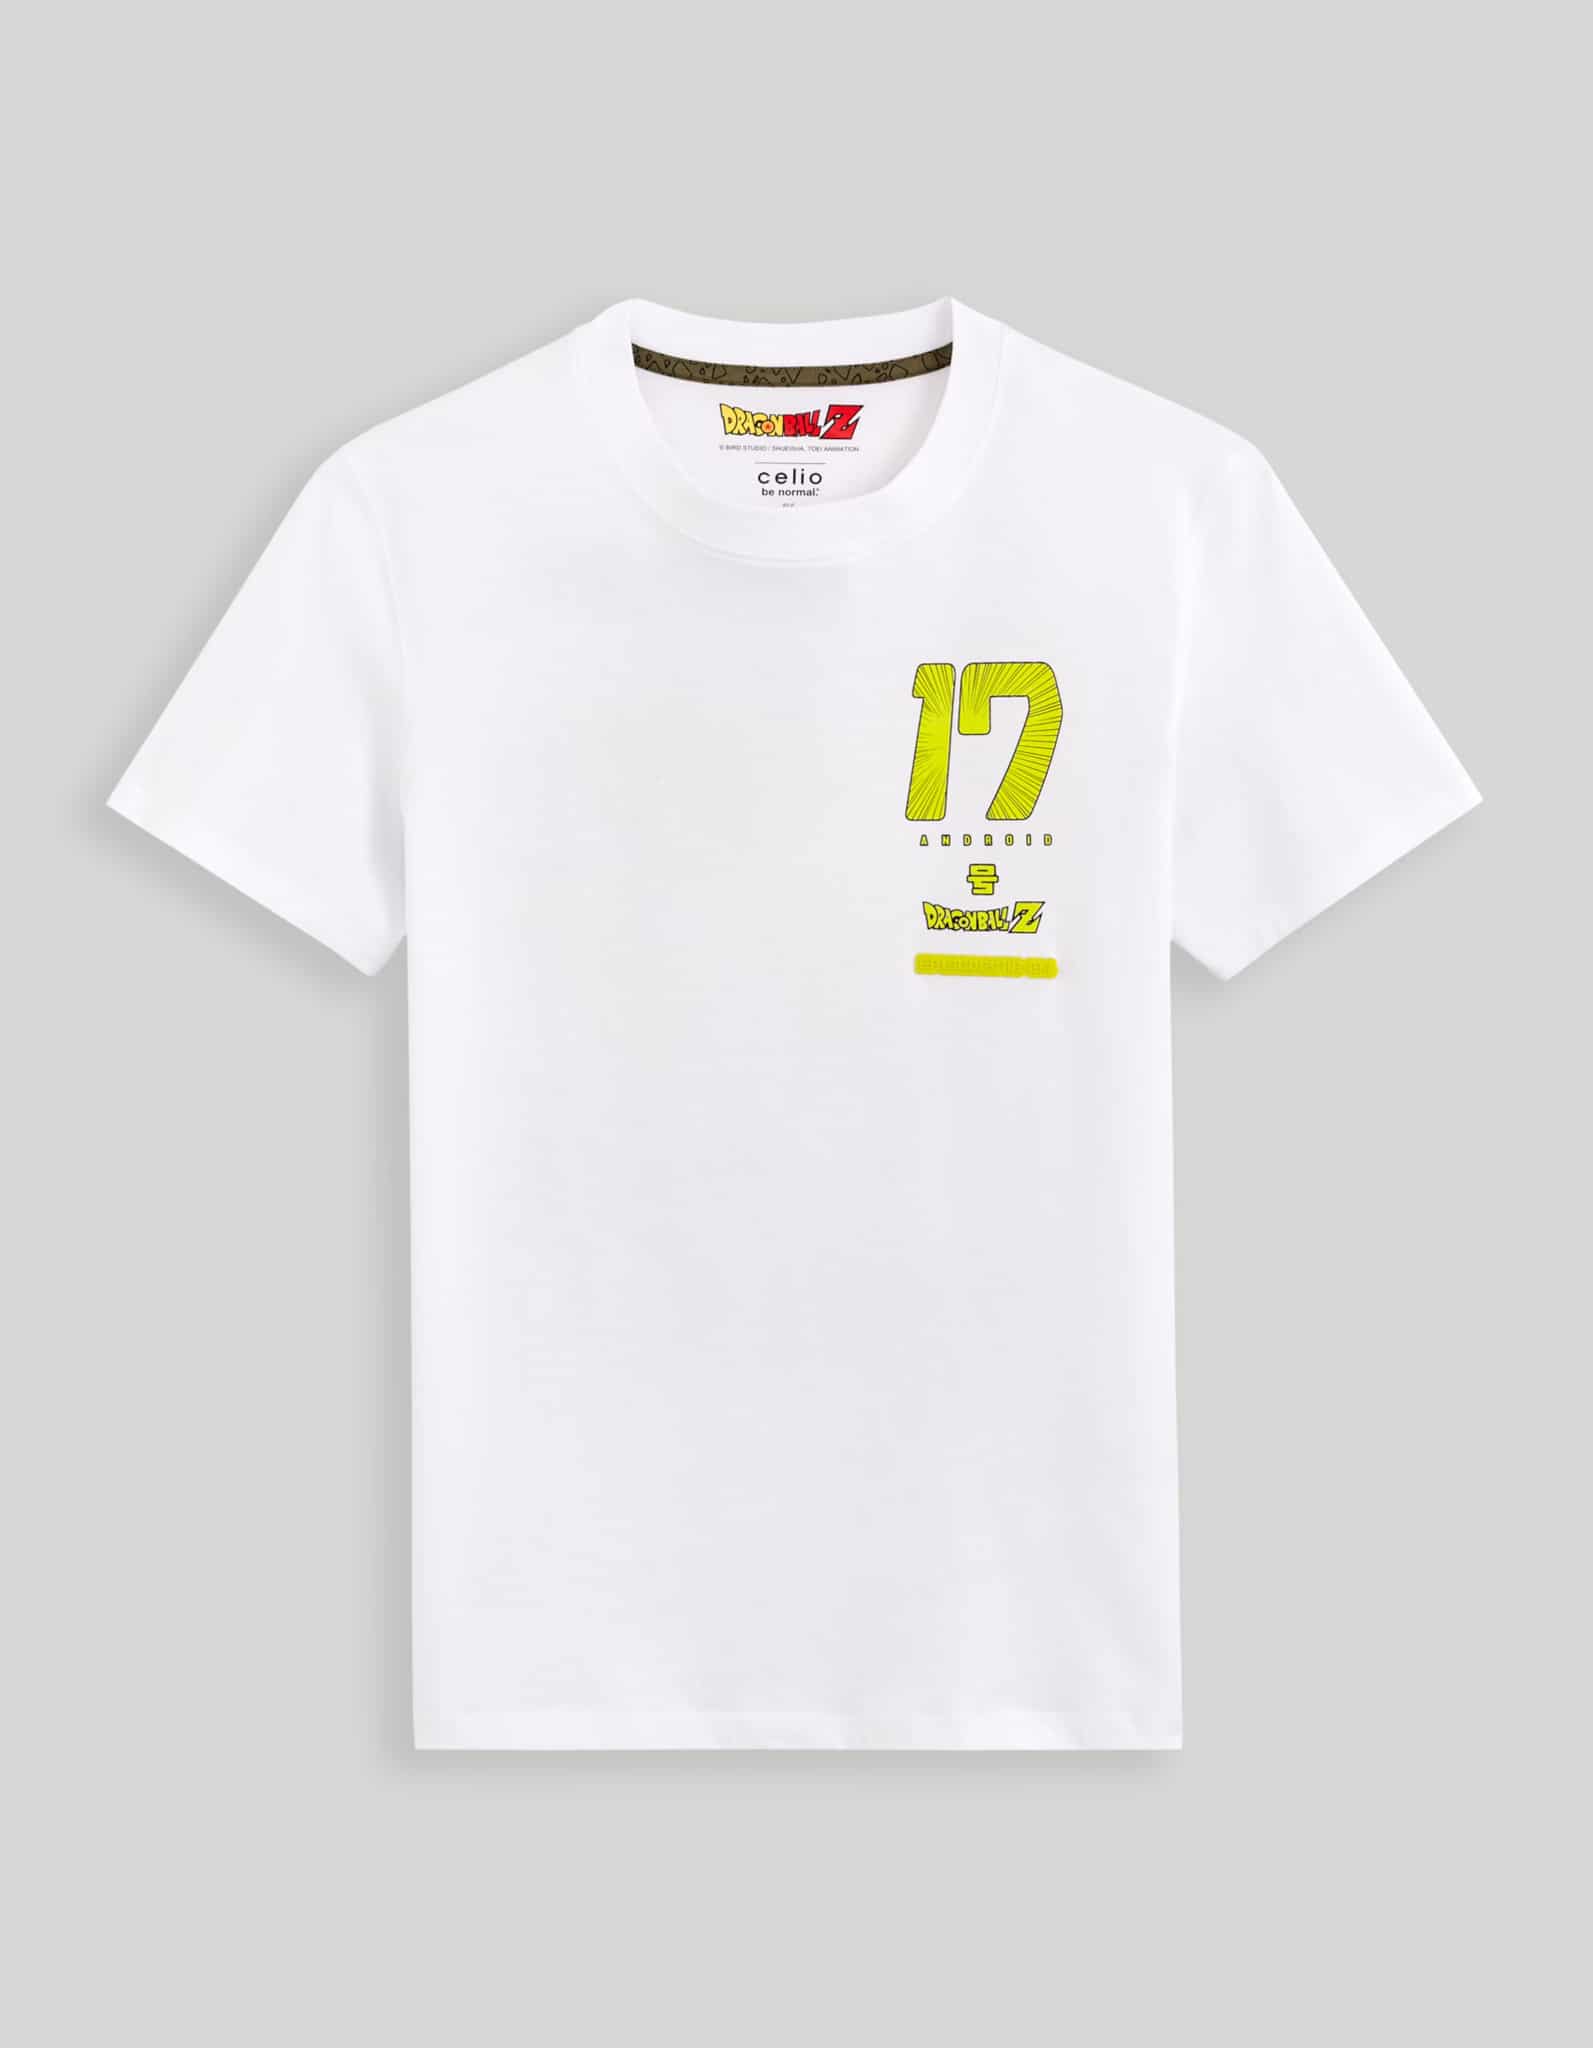 Celio-x-Dragon-Ball-Z-Collection-Cell-t-shirt-C-17-1